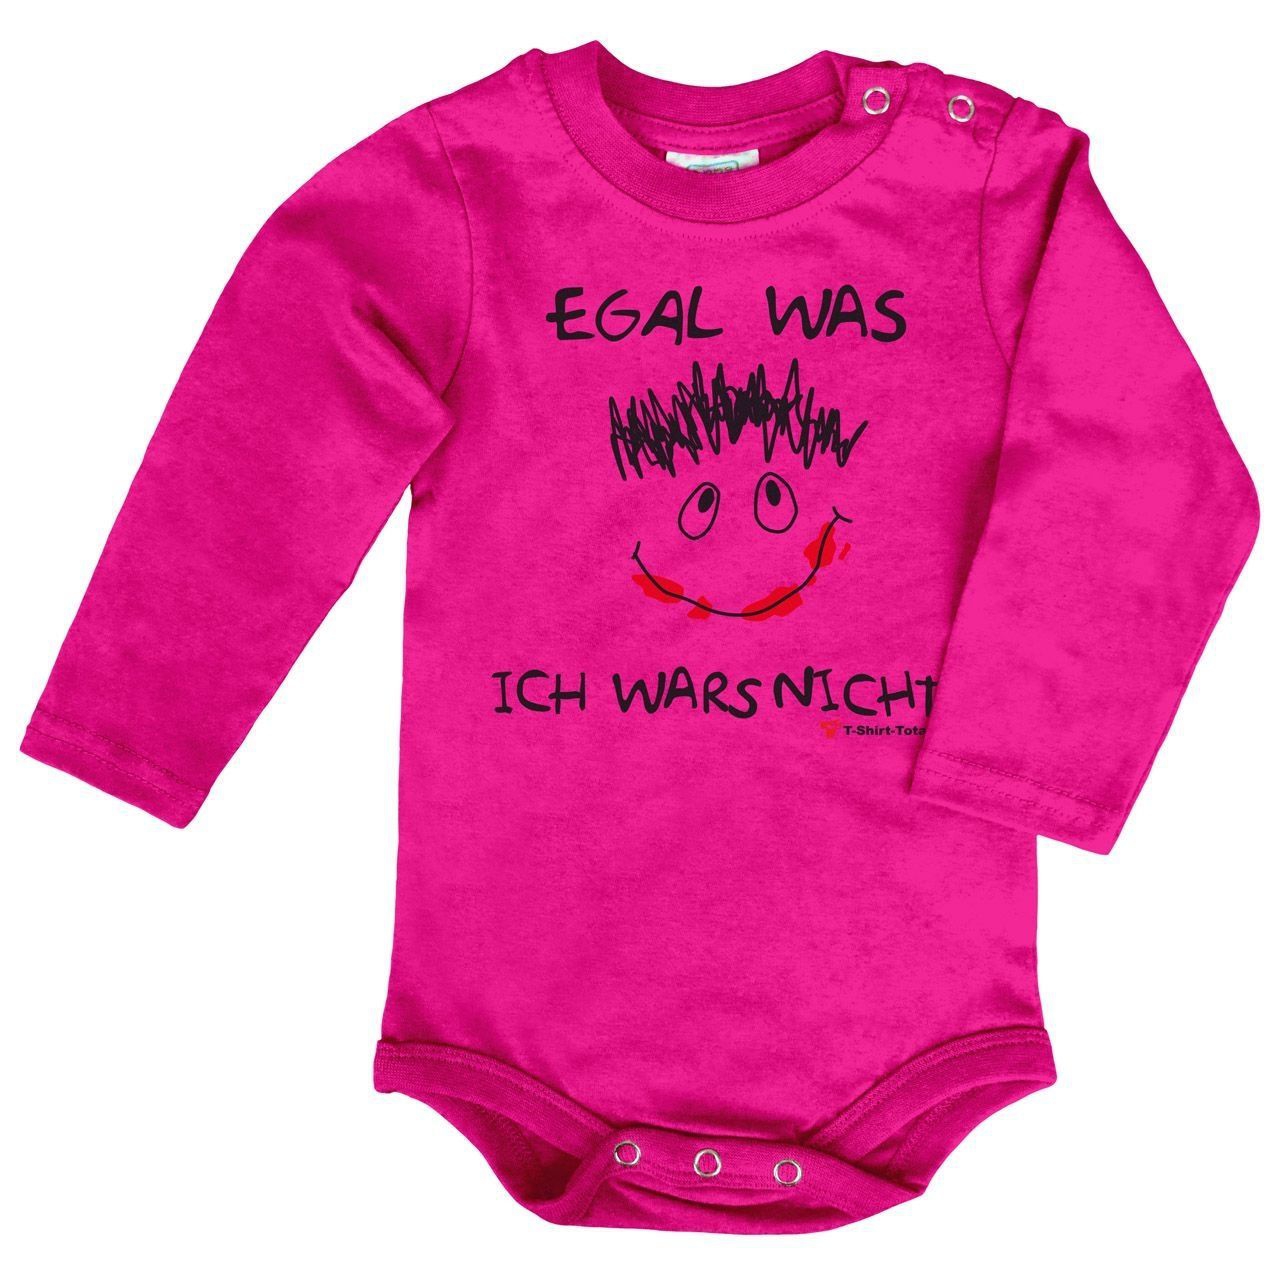 Egal was Baby Body Langarm pink 68 / 74